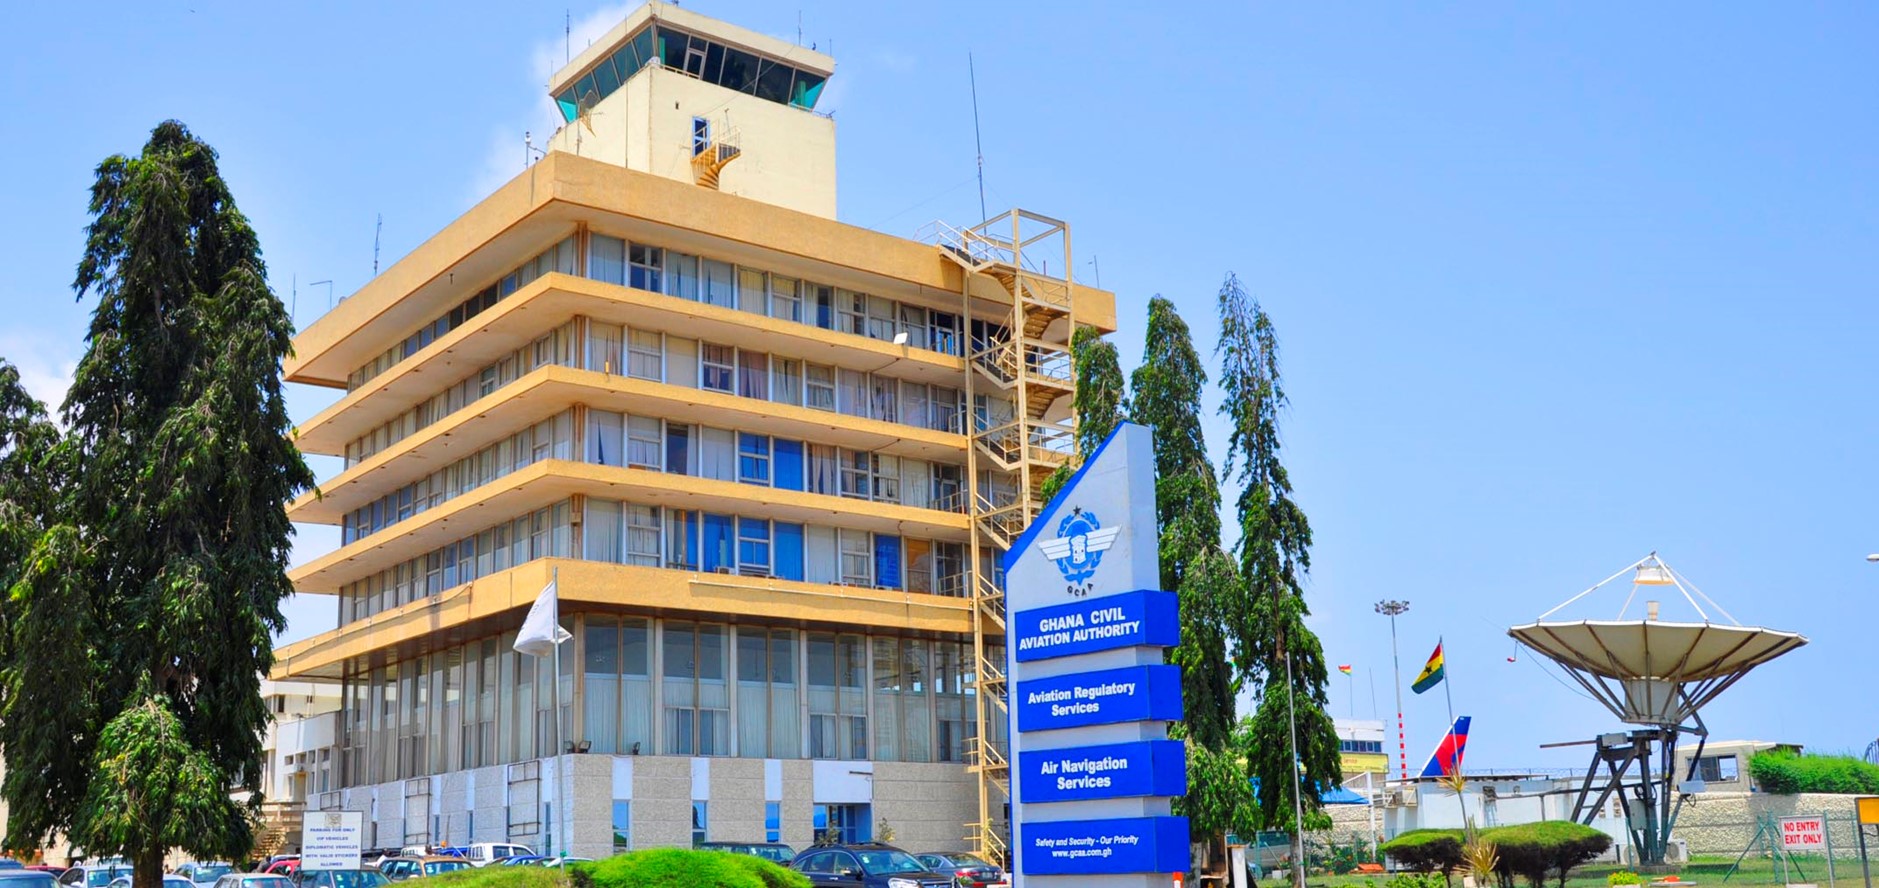 Statement on KLM Incident at Kotoka International Airport